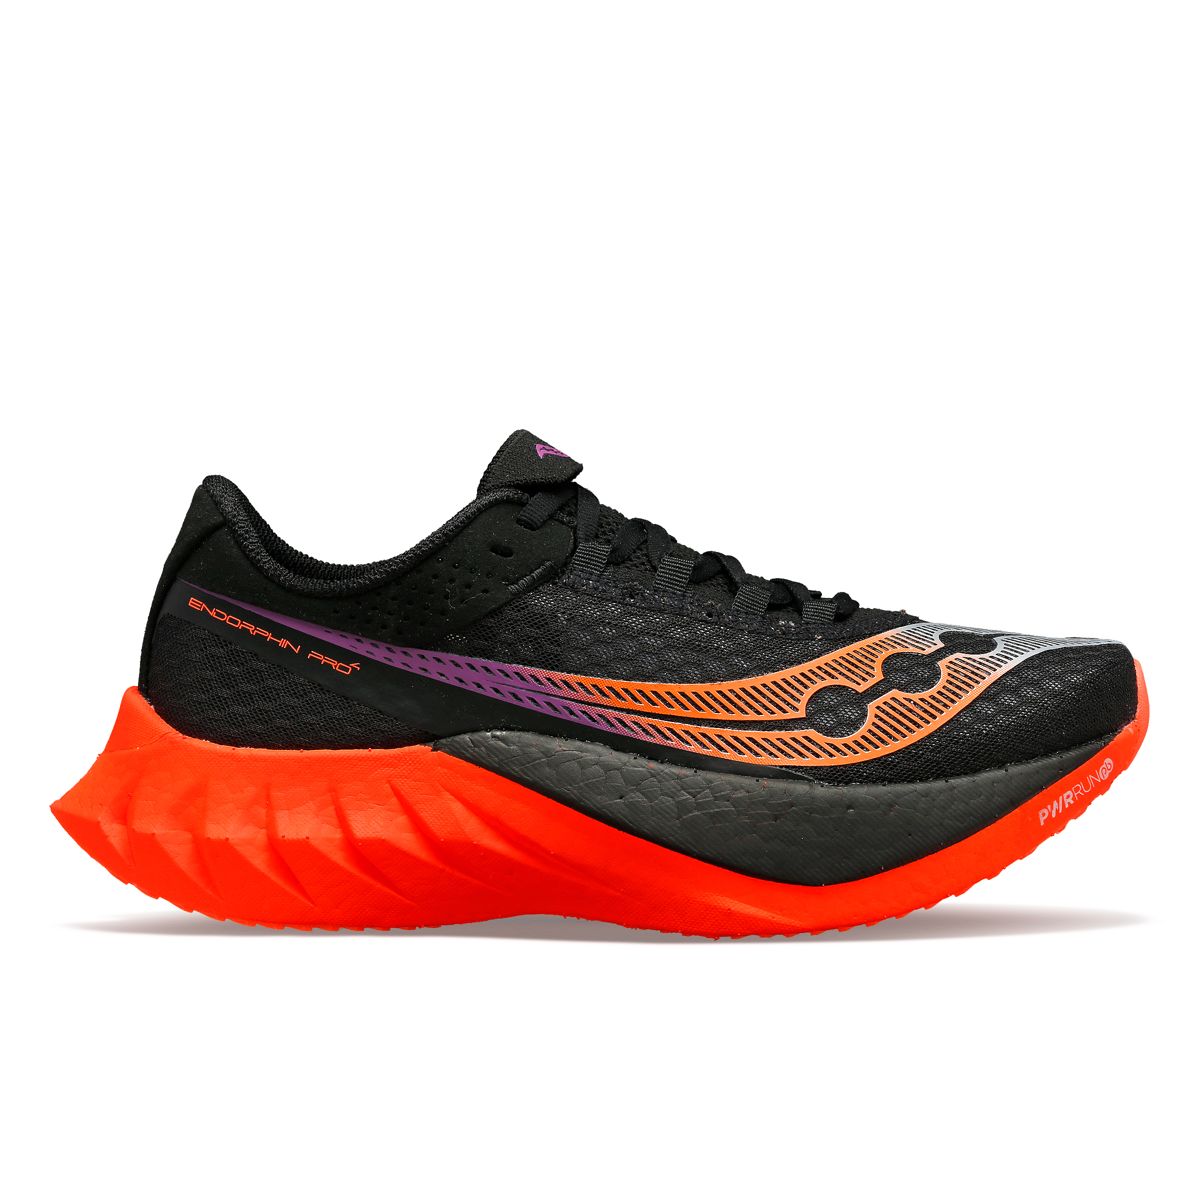 Men's Running Shoes: Shop Cushioned, Light u0026 Fast | Saucony